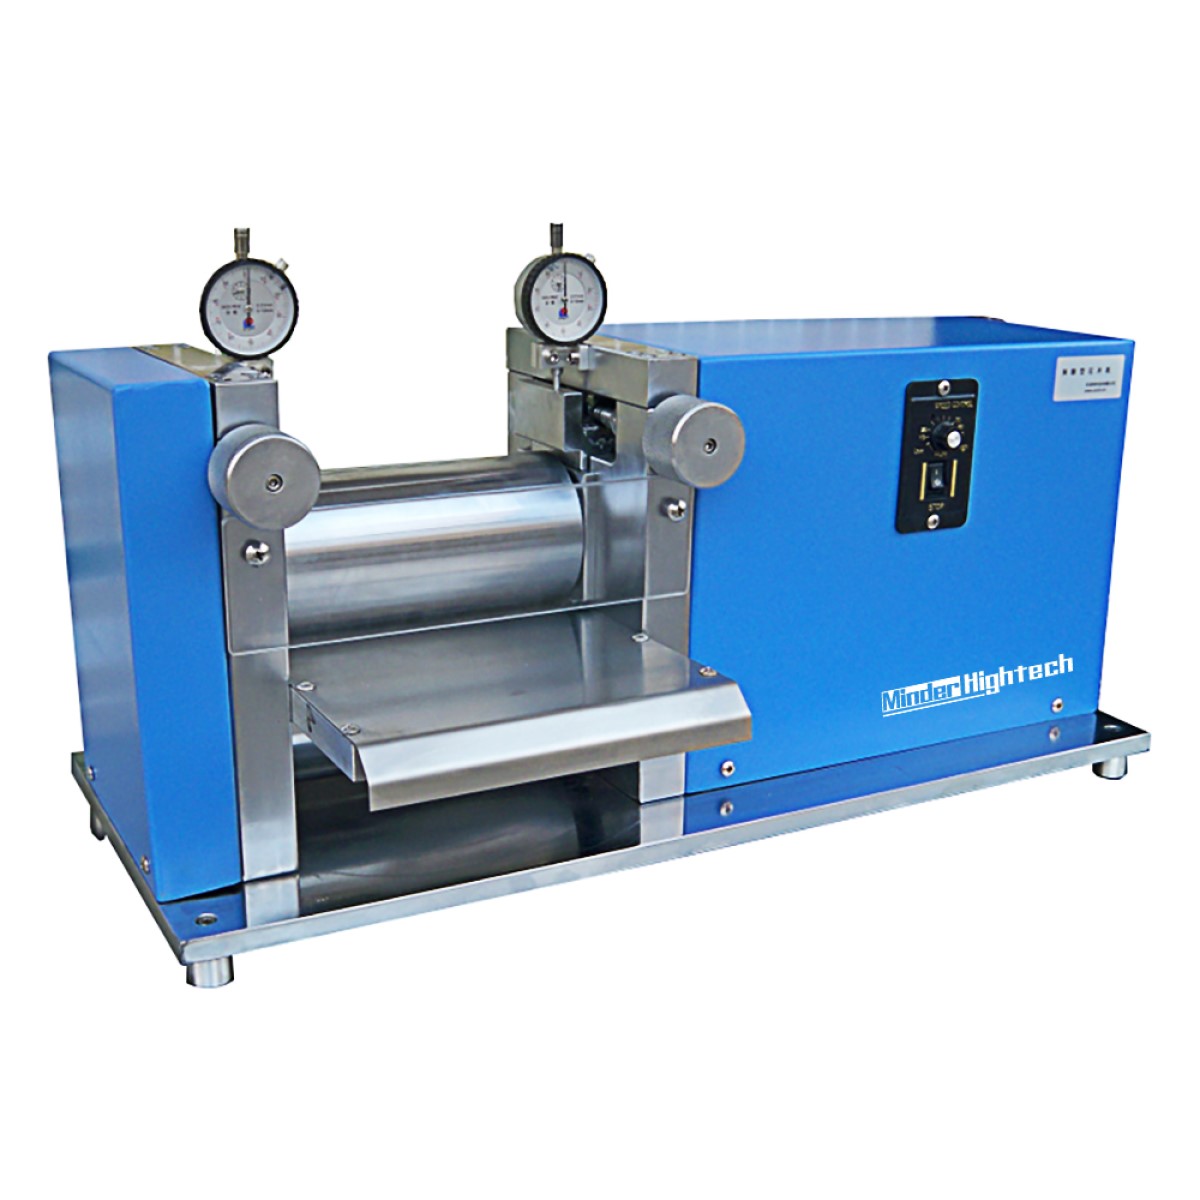 MD-GYJ-100B laboratory electric roller press